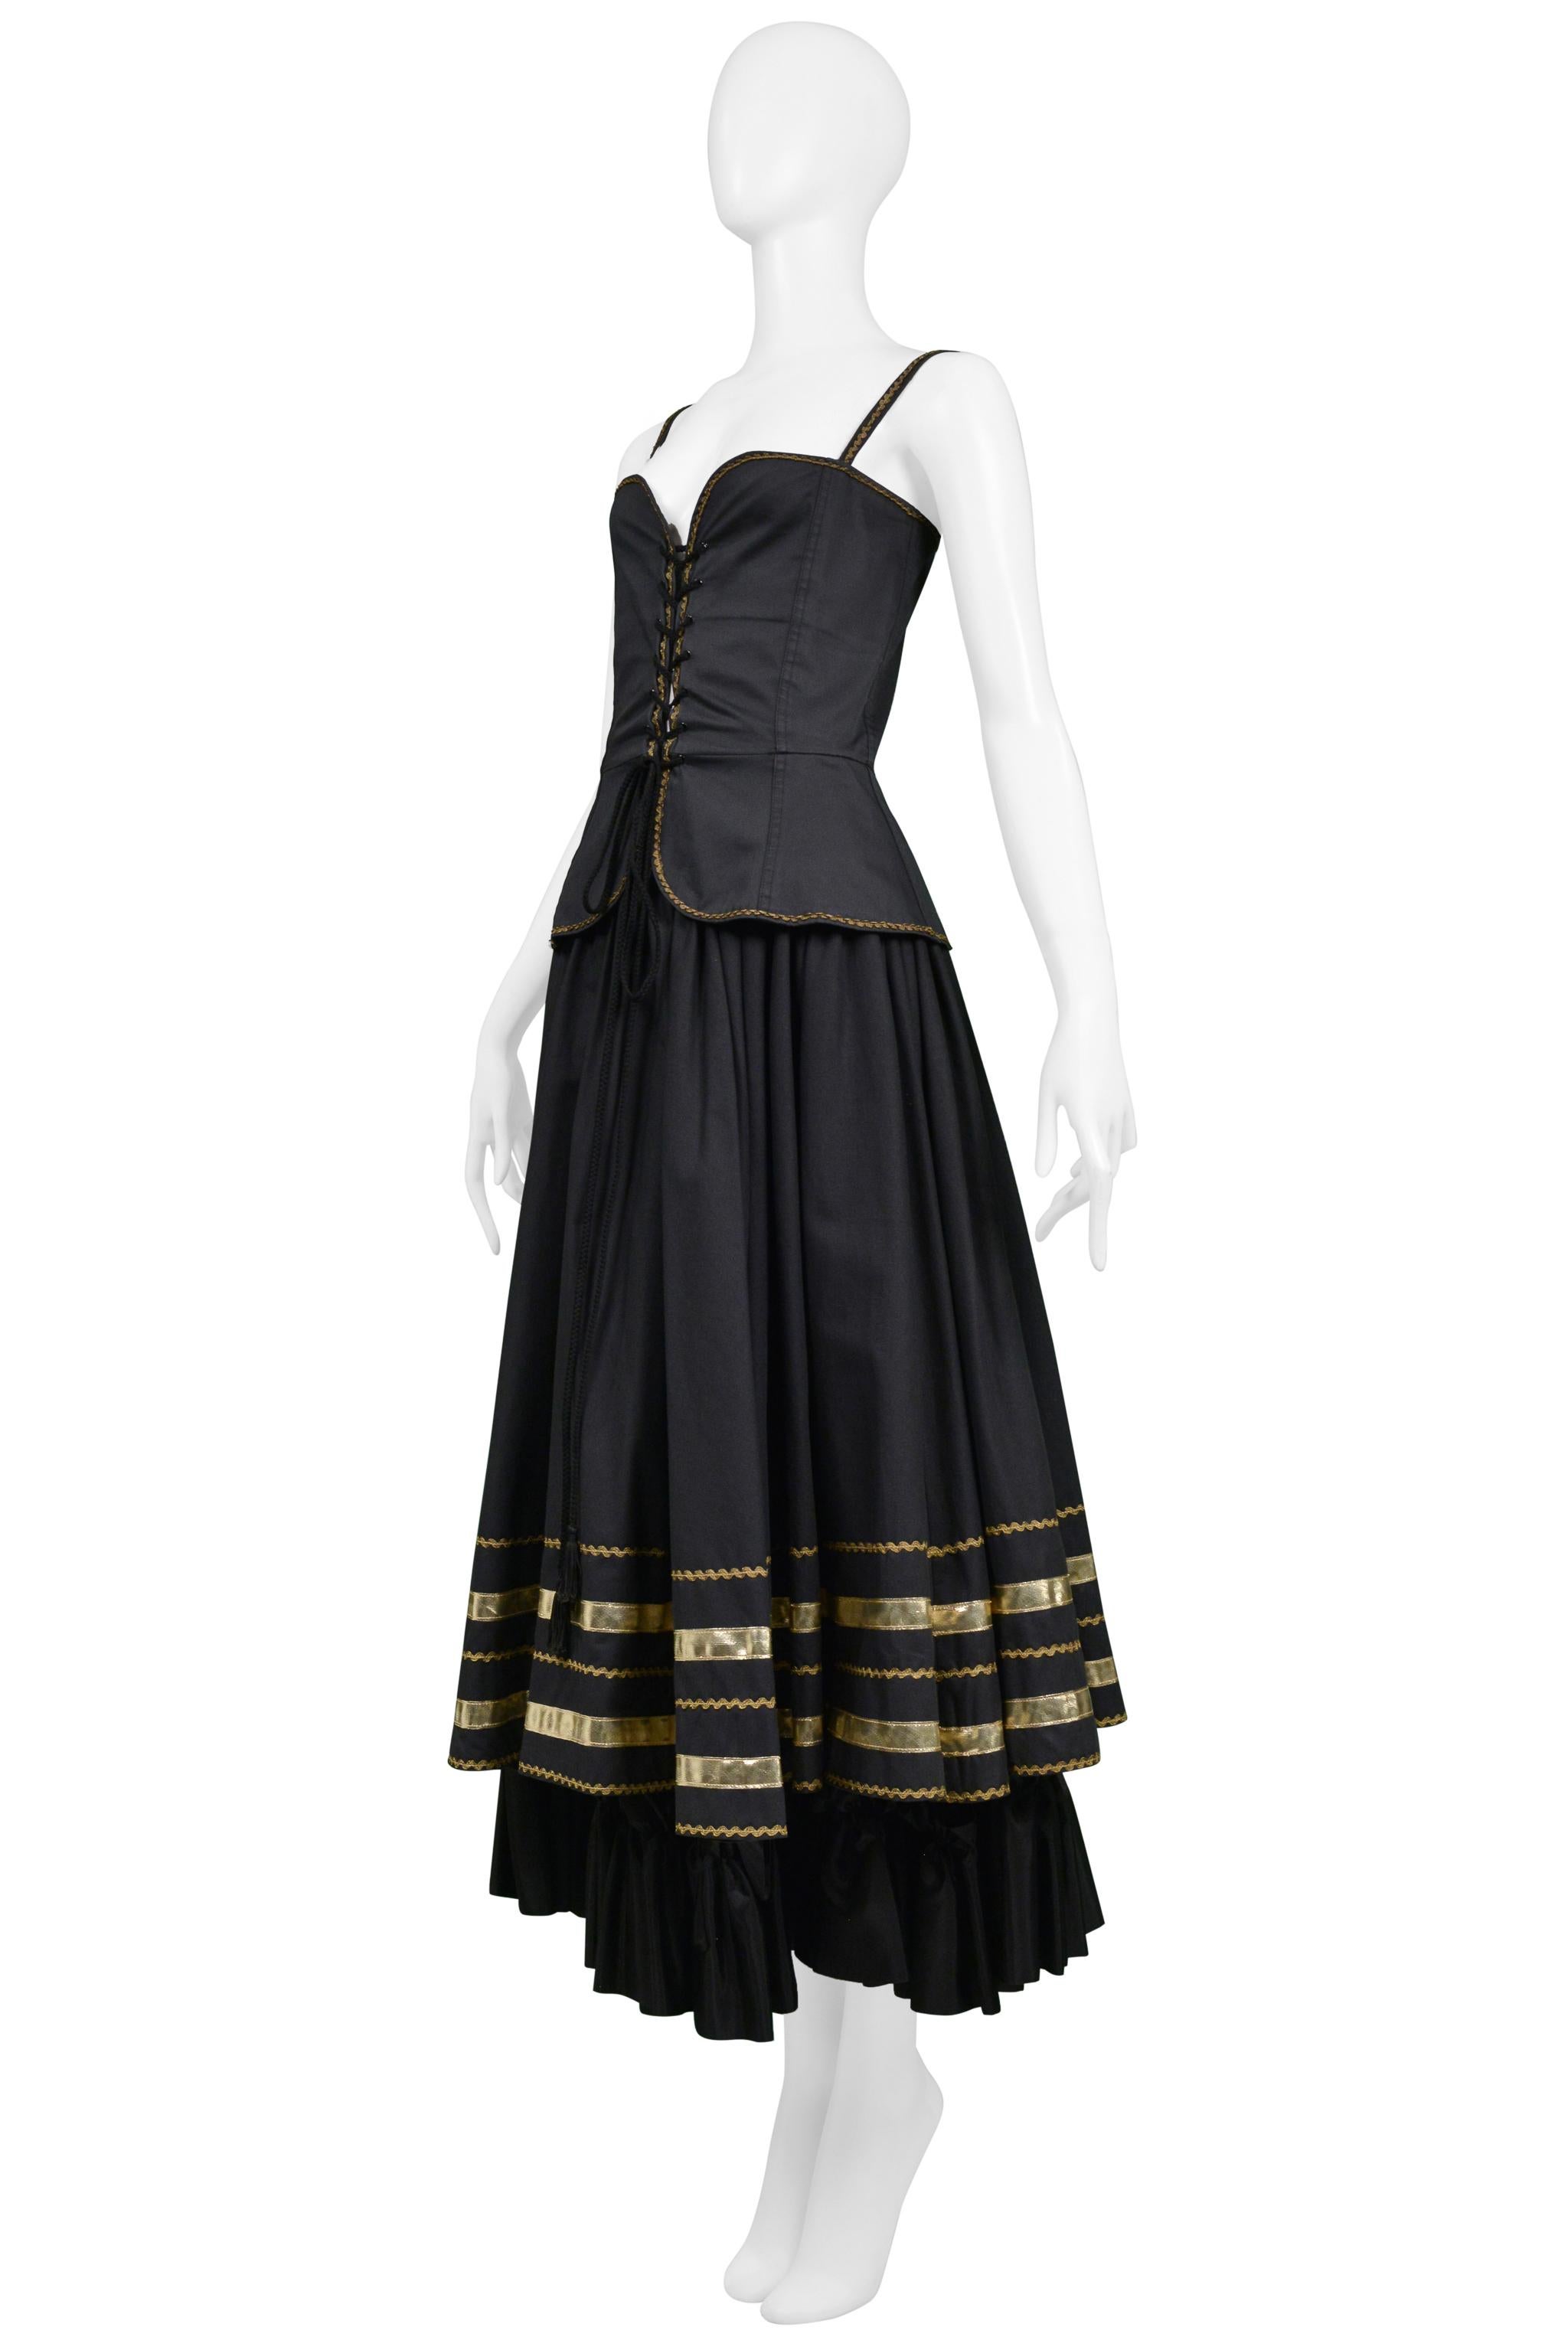 Women's Yves Saint Laurent Ysl Black & Gold Corset Top & Fancy Peasant Skirt 1970s For Sale